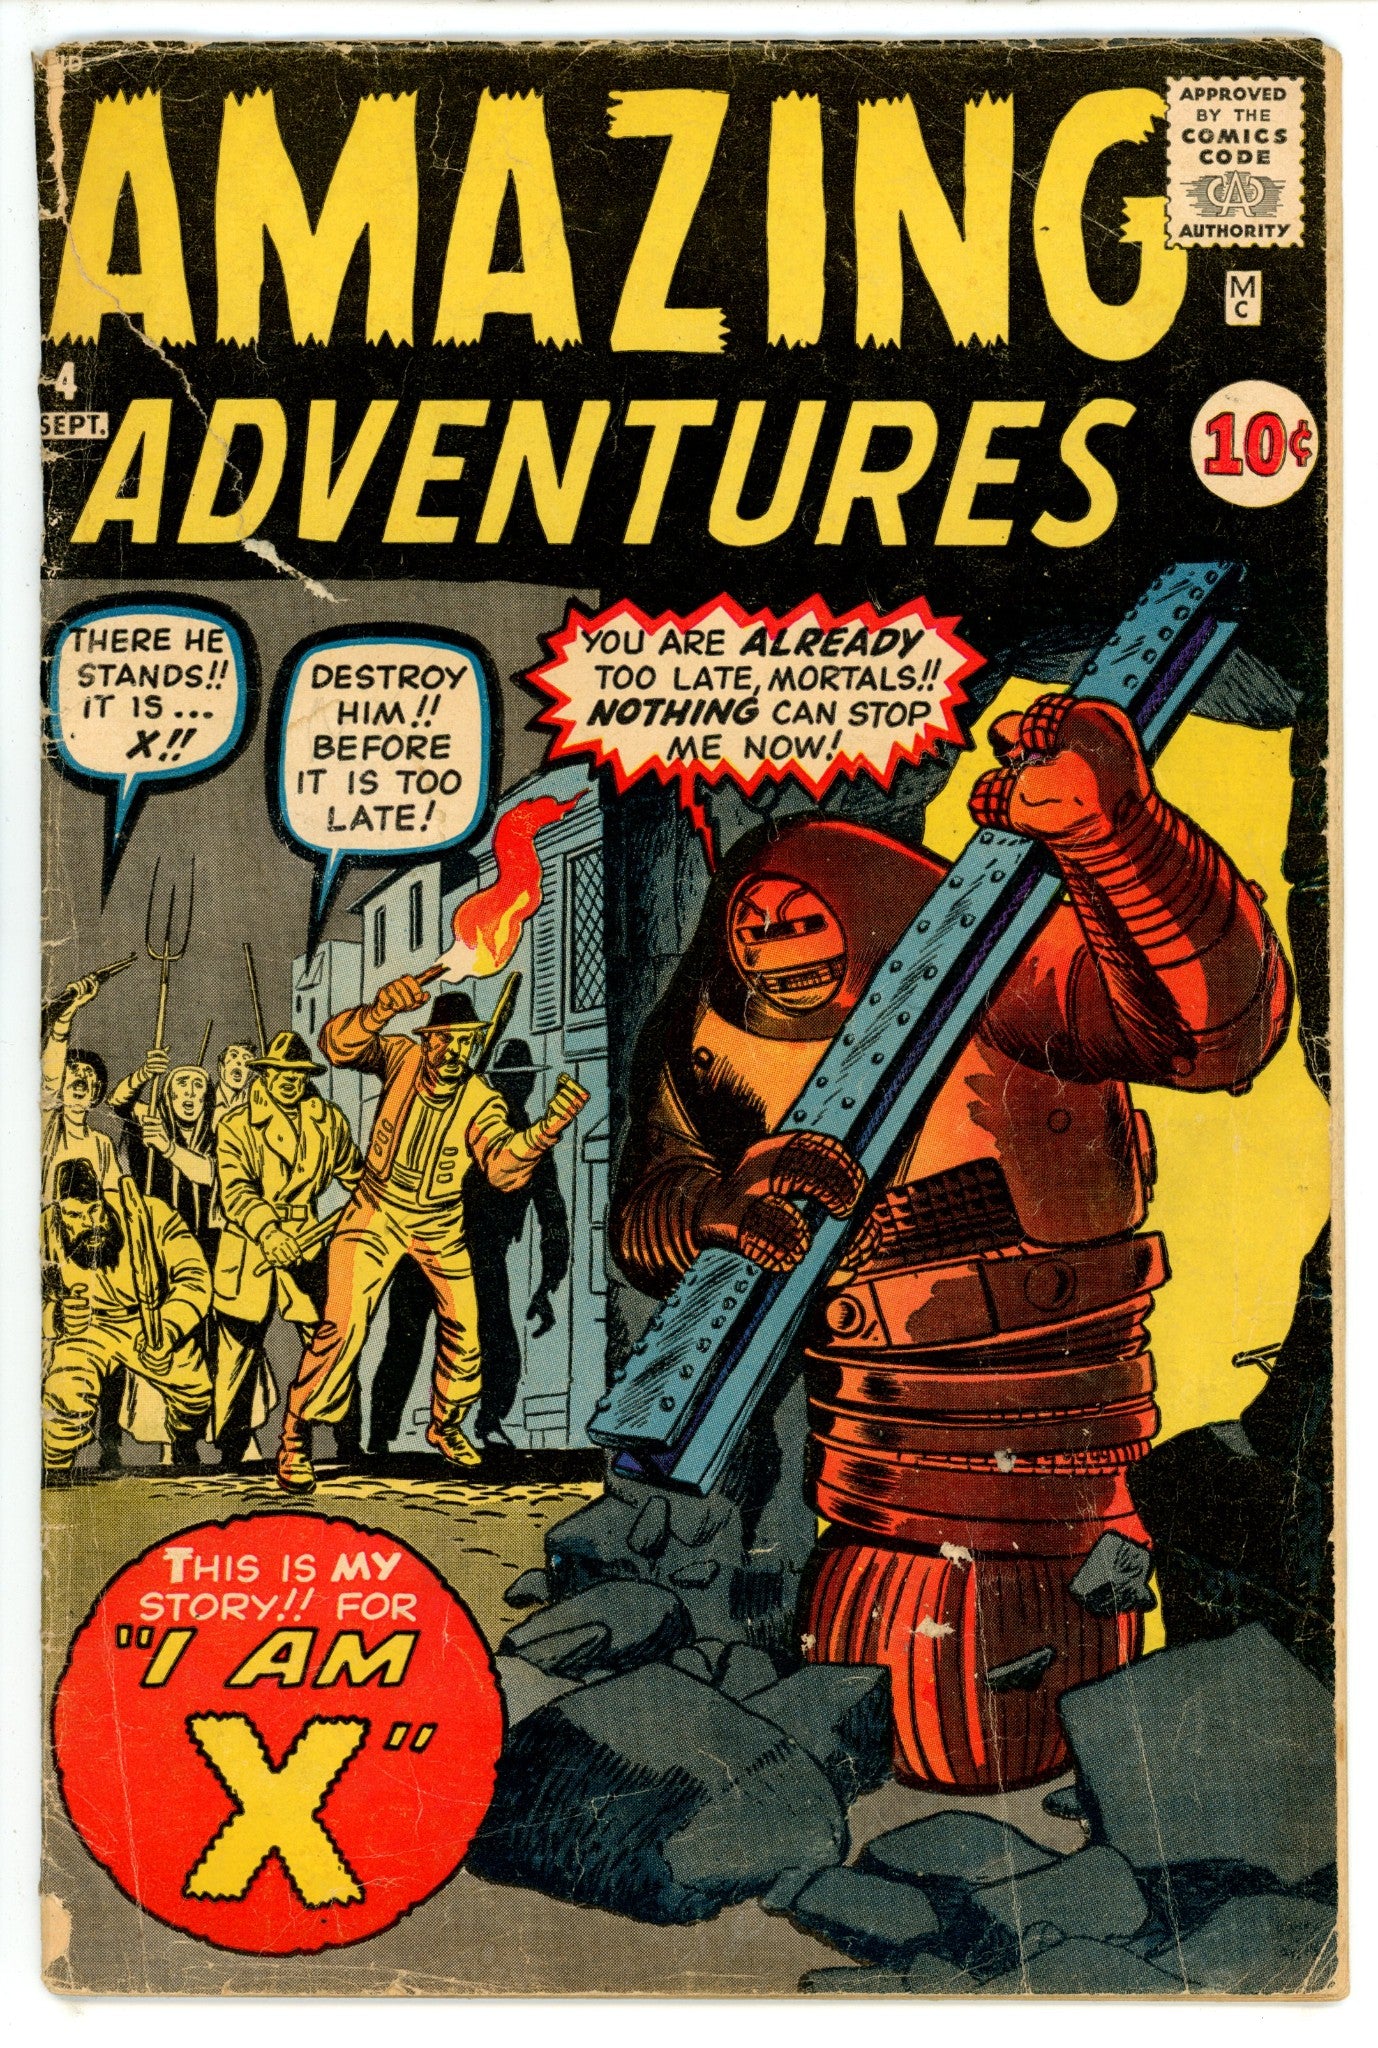 Amazing Adventures Vol 1 4 GD (1961)